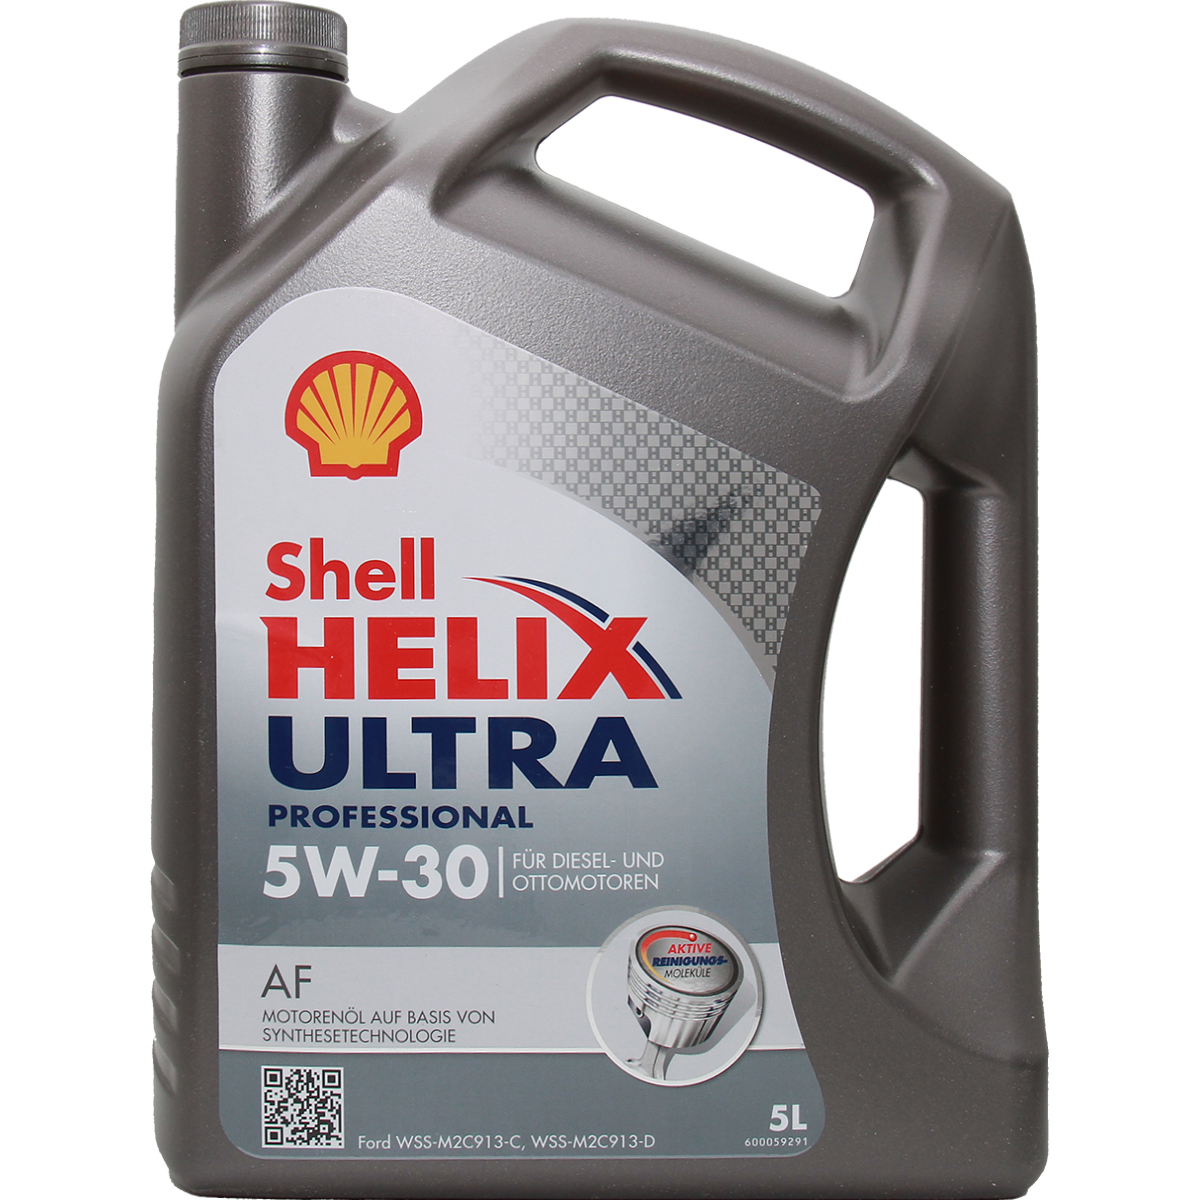 Shell Helix Ultra Professional AF 5W-30 5 Liter